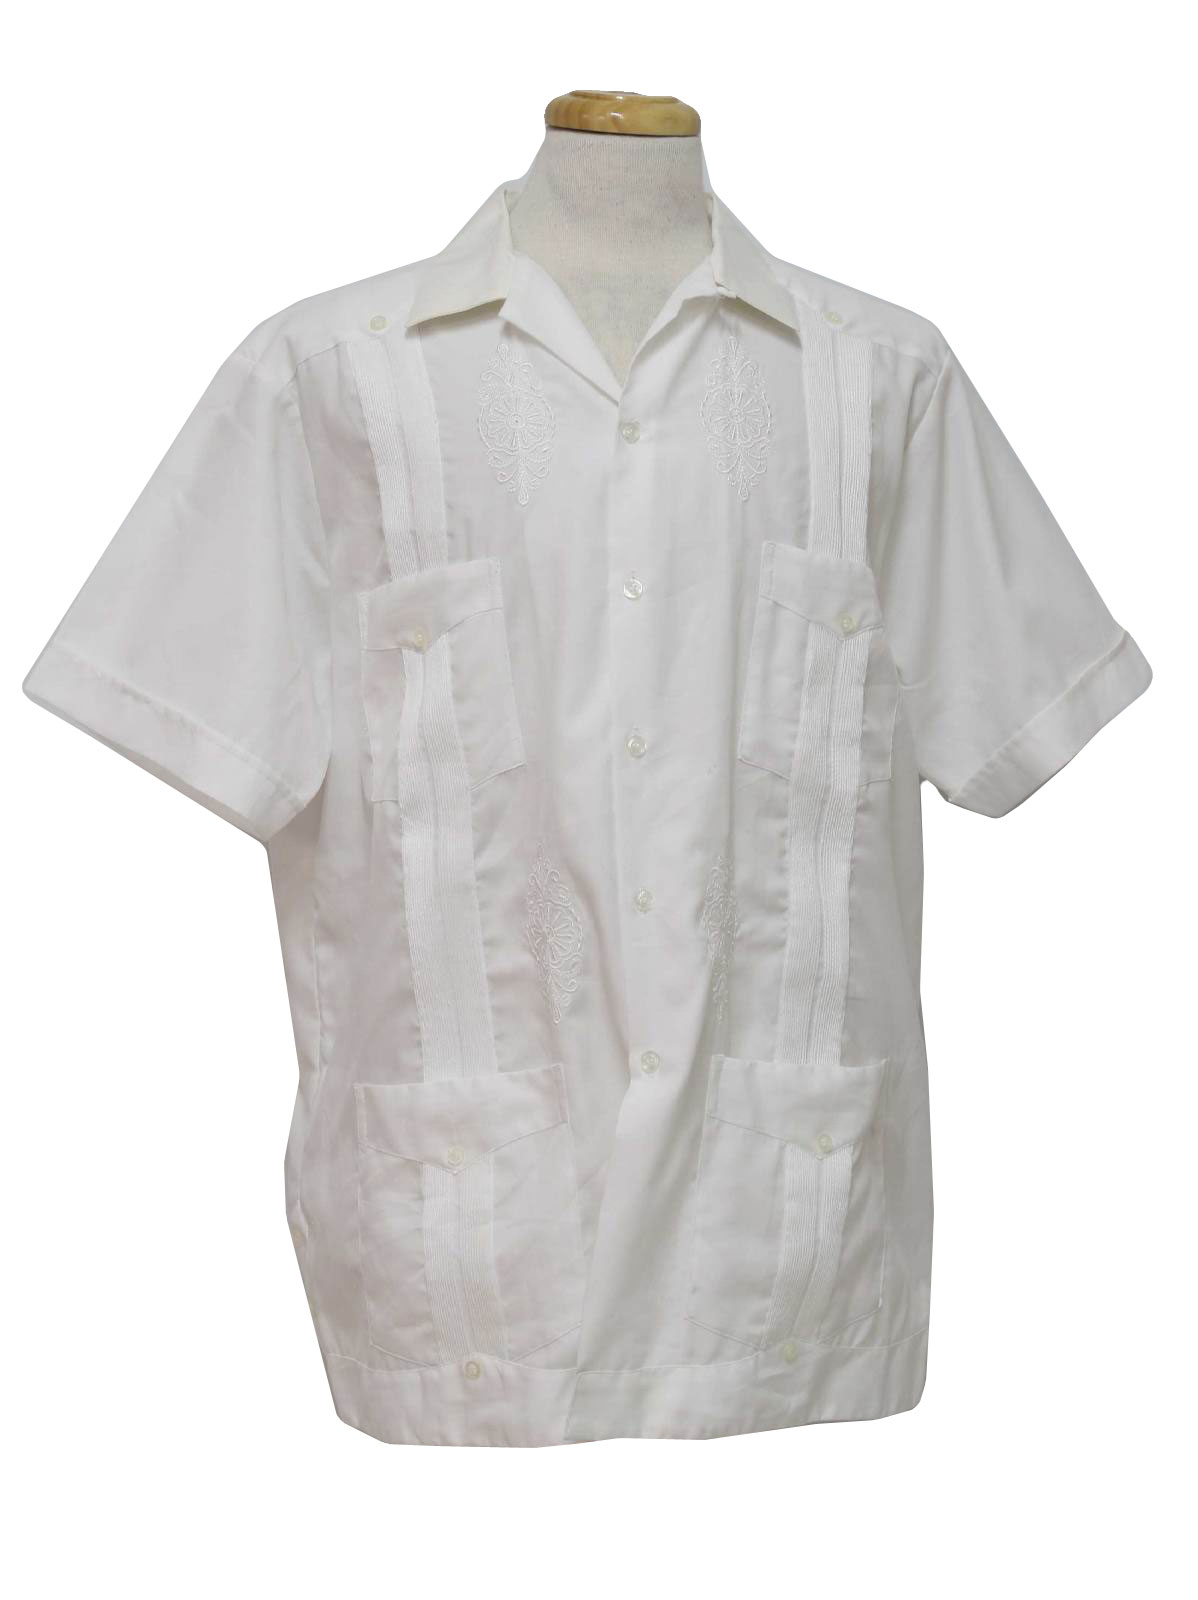 Vintage 80s Guayabera Shirt: 80s -Guayateca- Mens white silky polyester ...